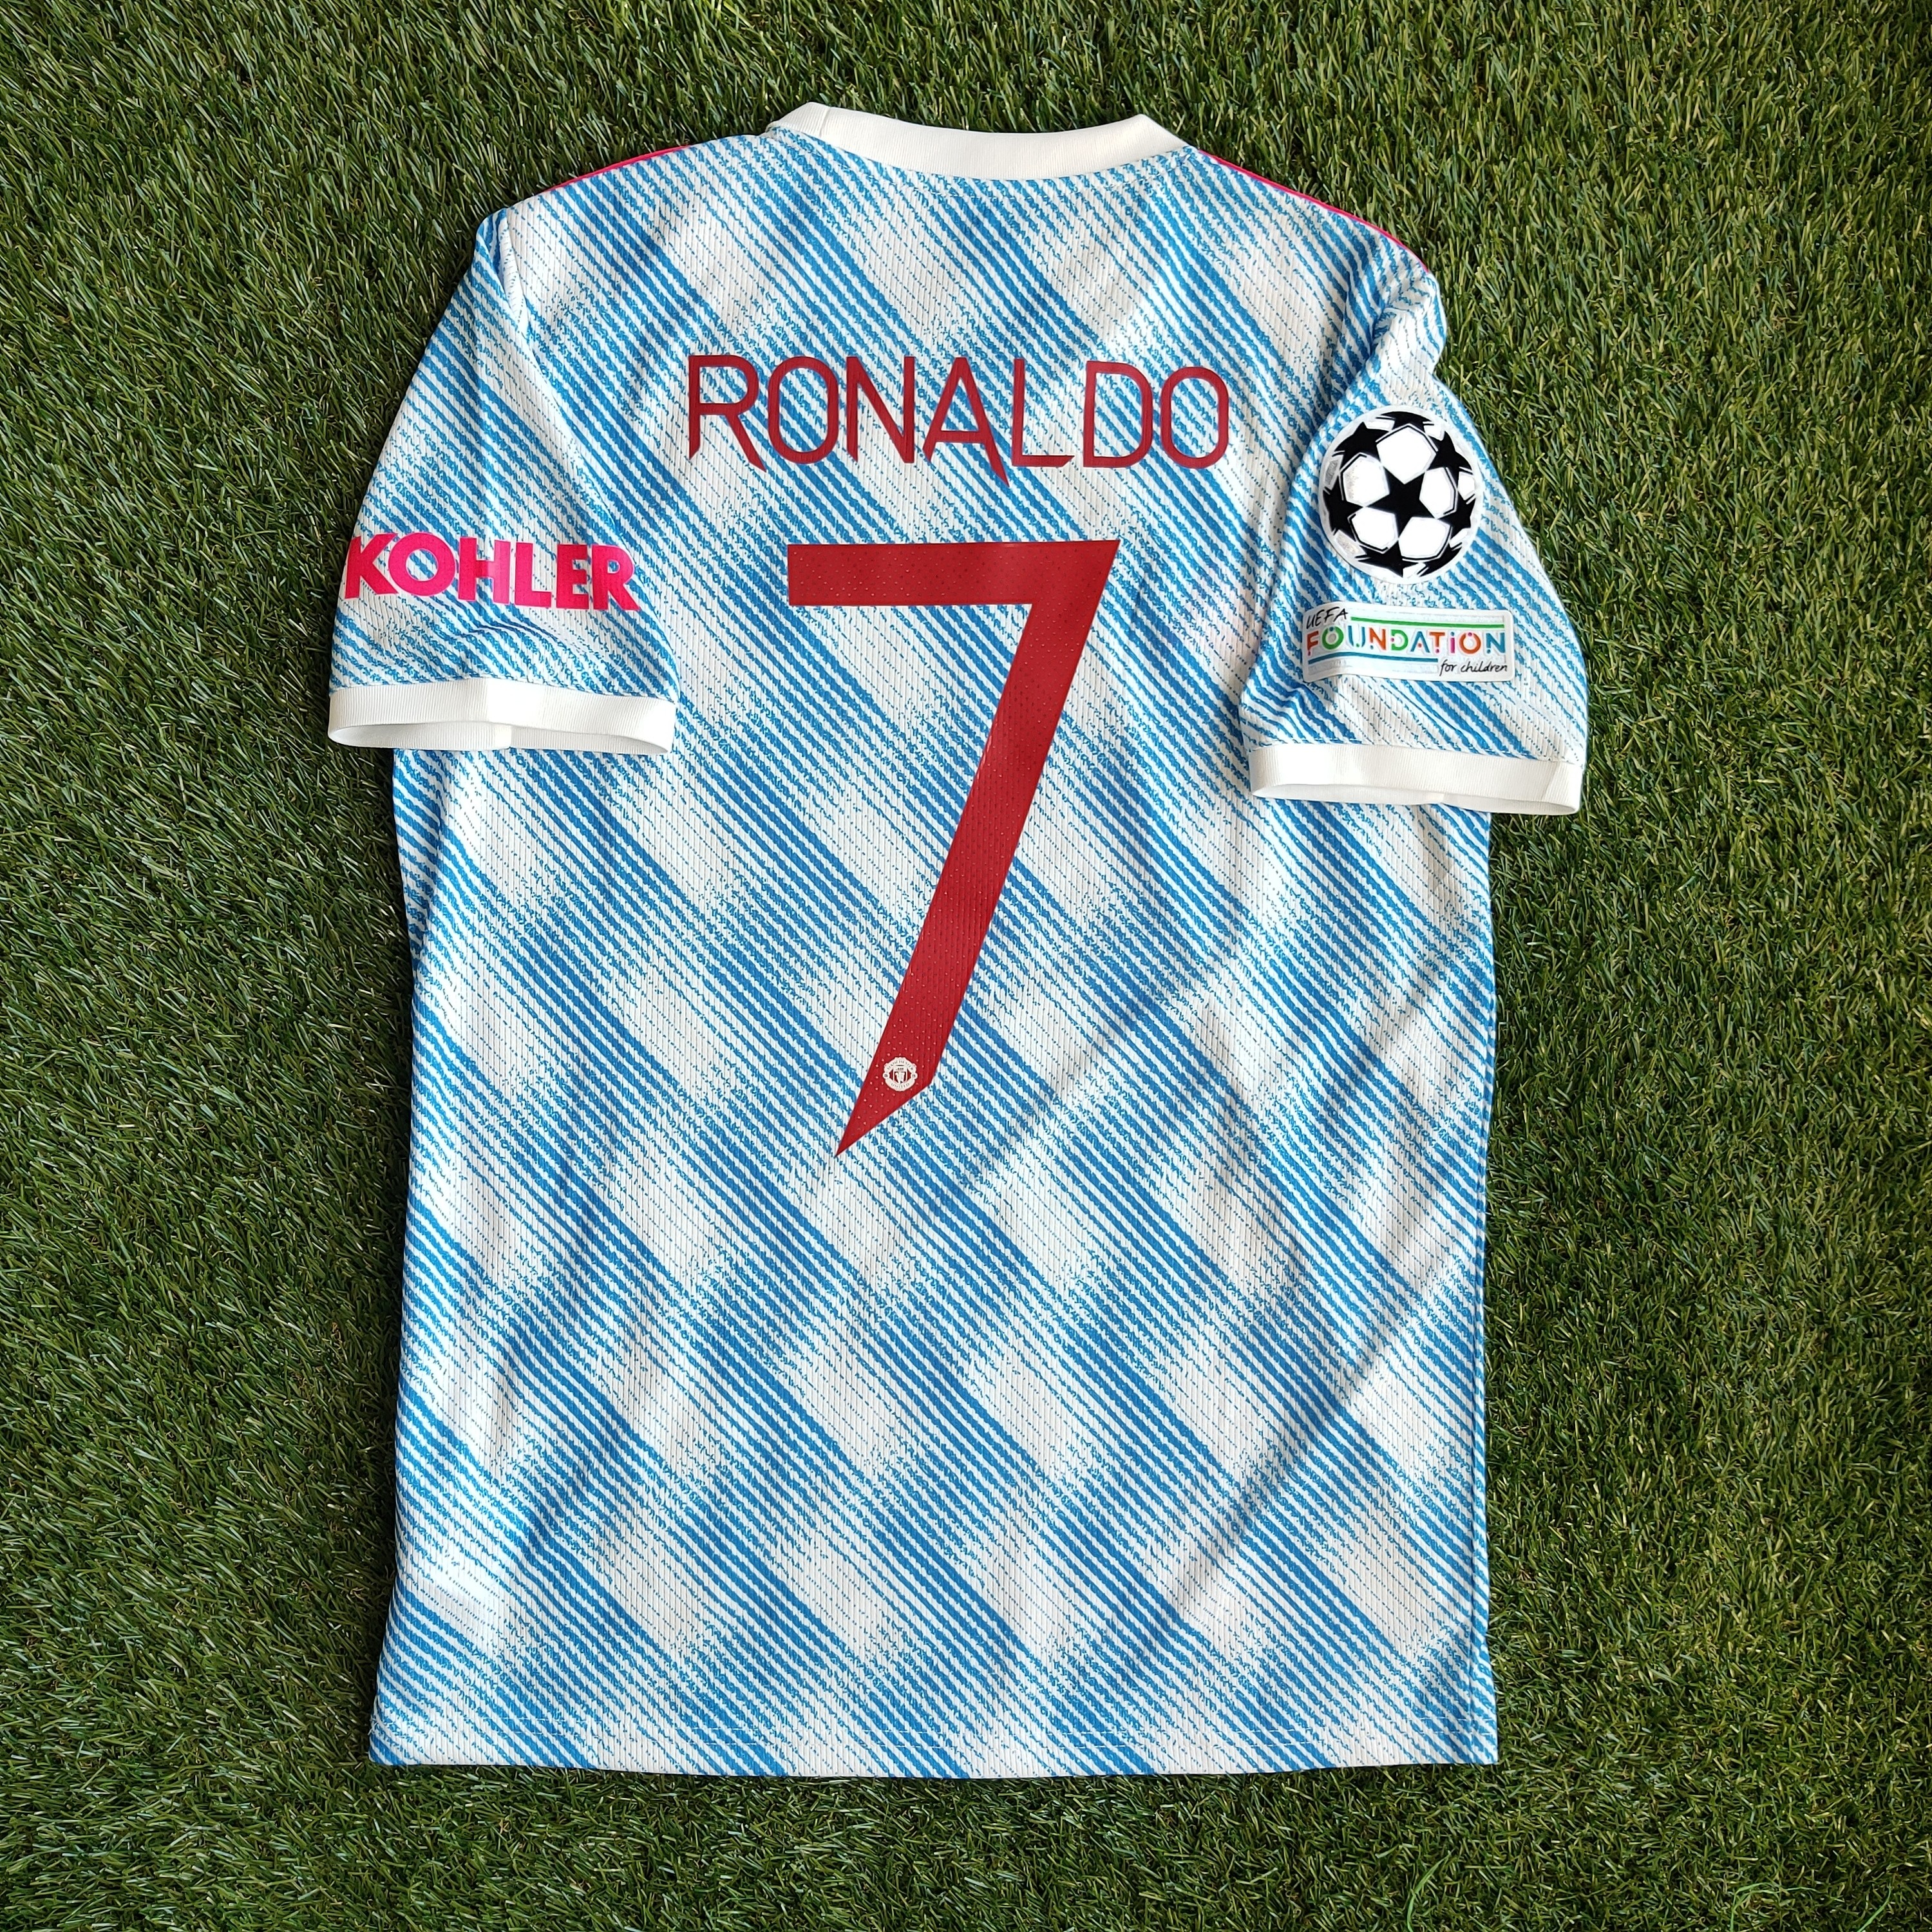 Buy Ronaldo Manchester United Home Jersey Kits at Ubuy Bhutan